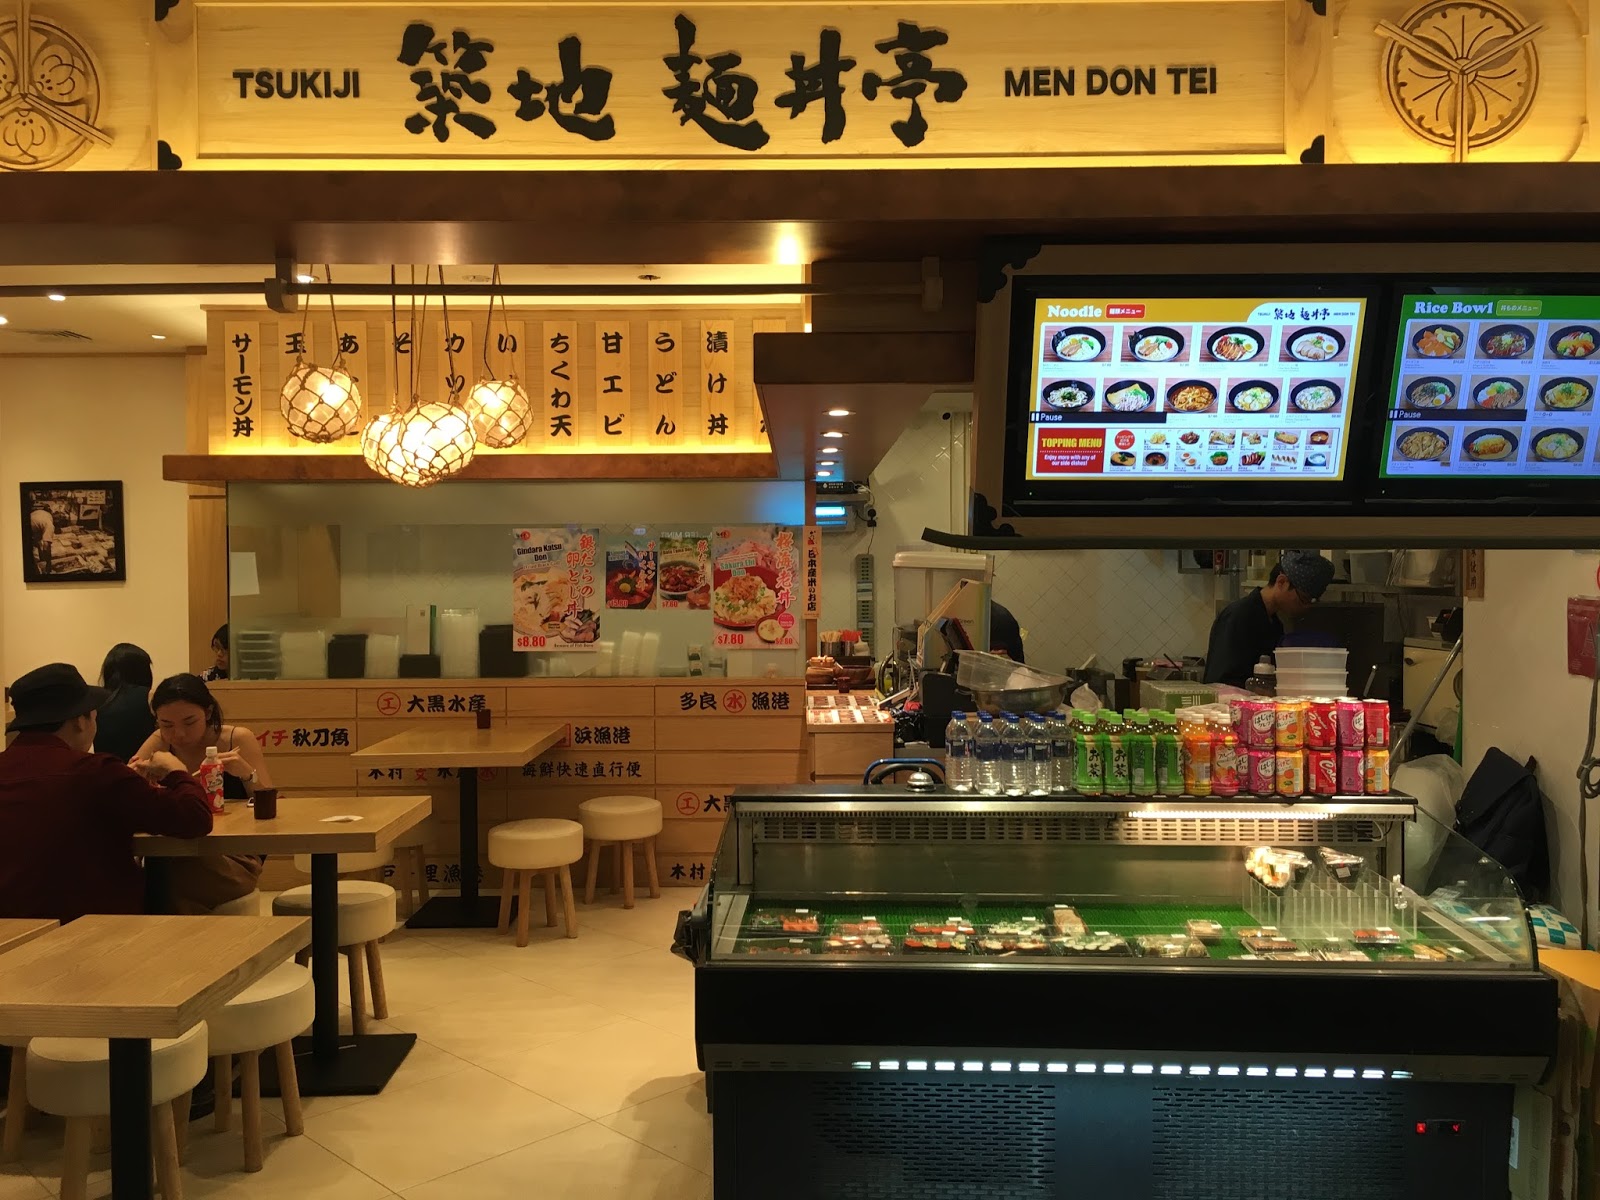 Tsukiji Men Don Tei - Good Japanese Fast Food Restaurant